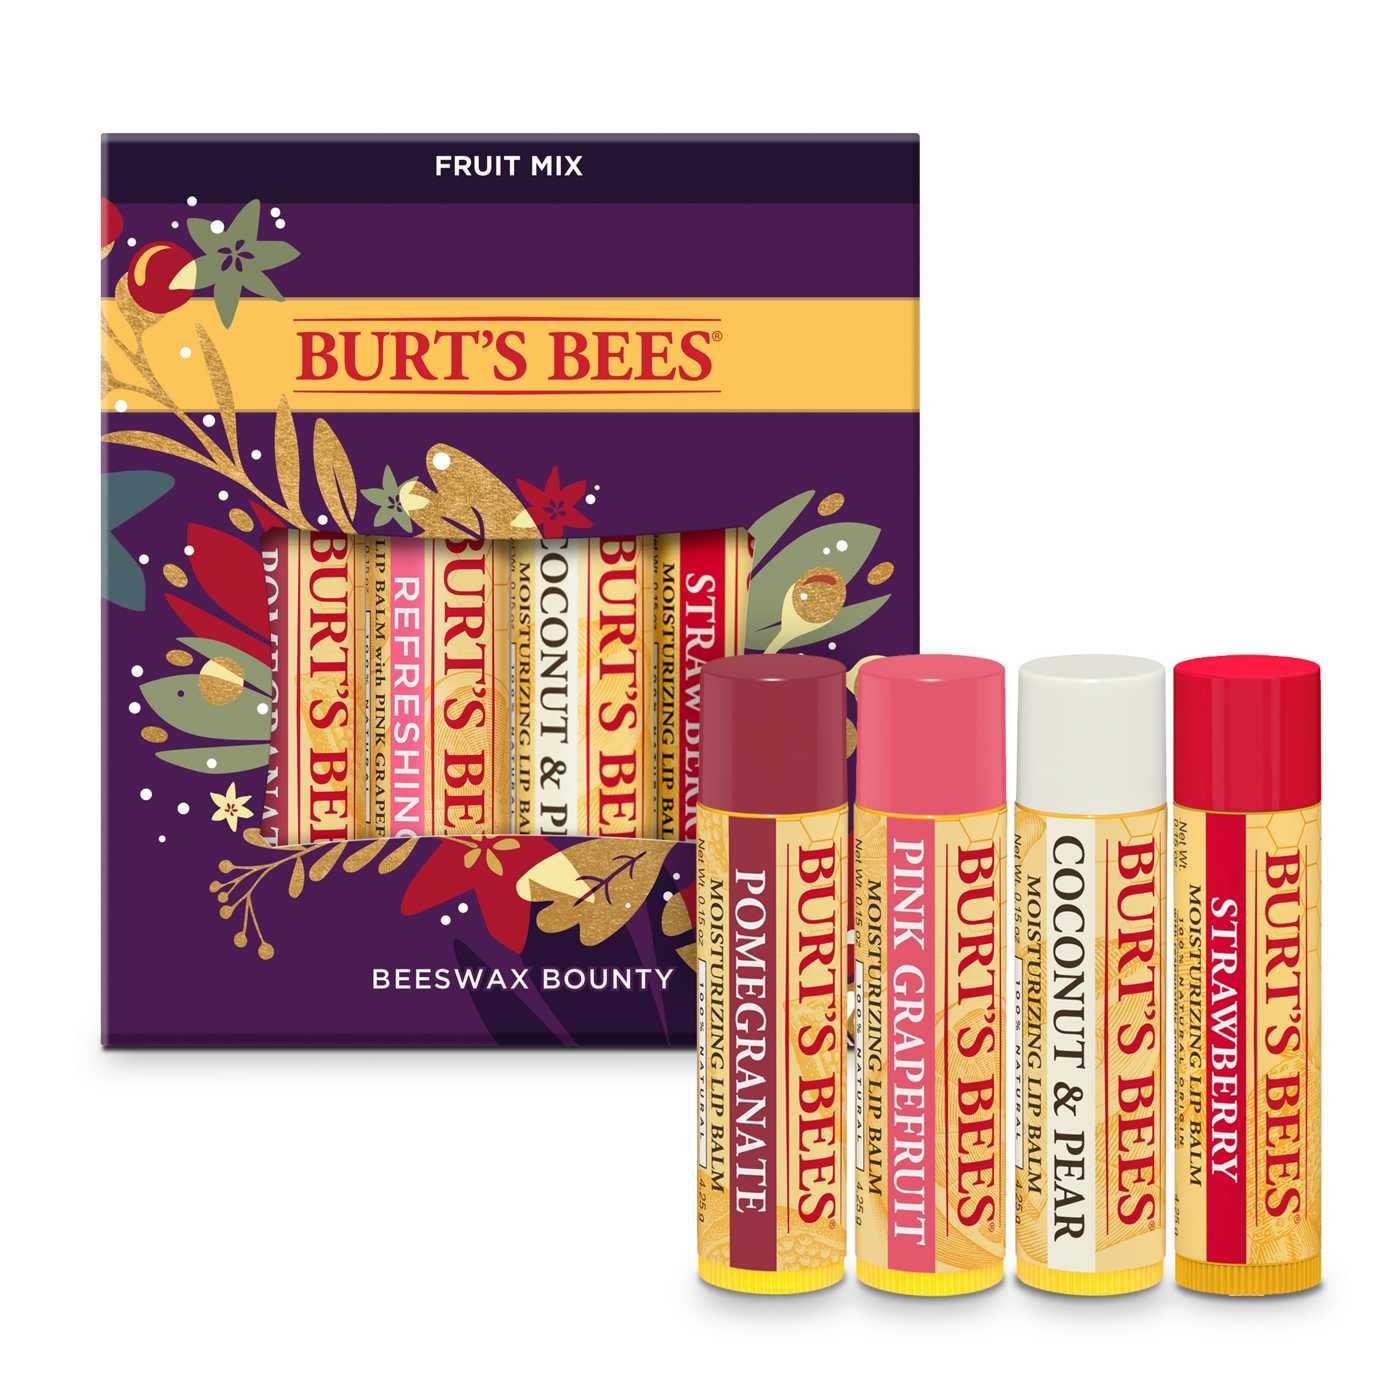 Burt's Bees Beeswax Bounty Fruit Mix Lip Balm Holiday Gift Set; image 2 of 2